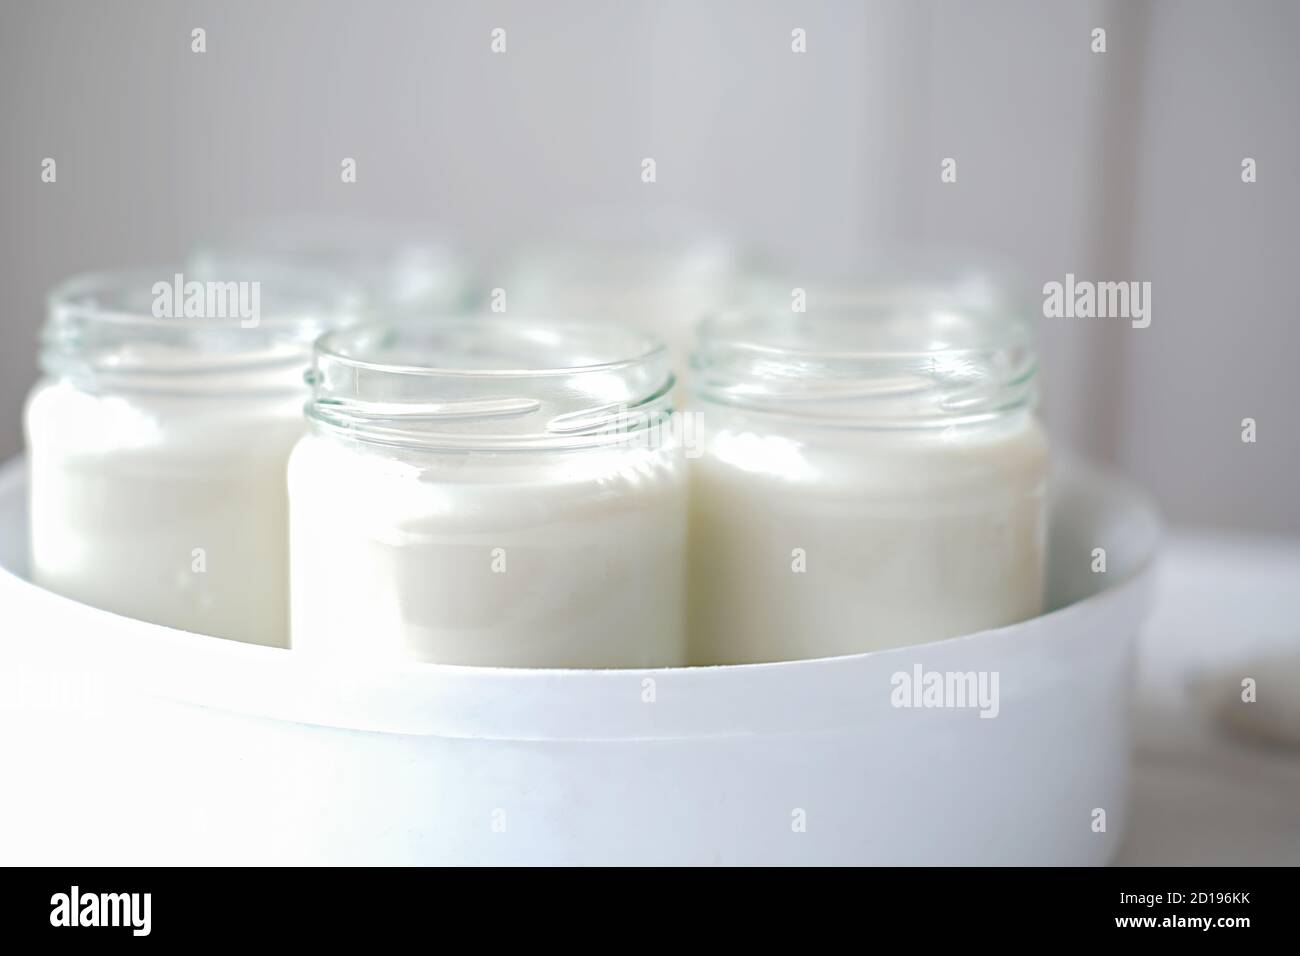 homemade organic yogurt in glass jars in yogurt maker. automatic yogurt machine to make fermrnted milk product at home. yogurt making during quarantine concept.  Stock Photo